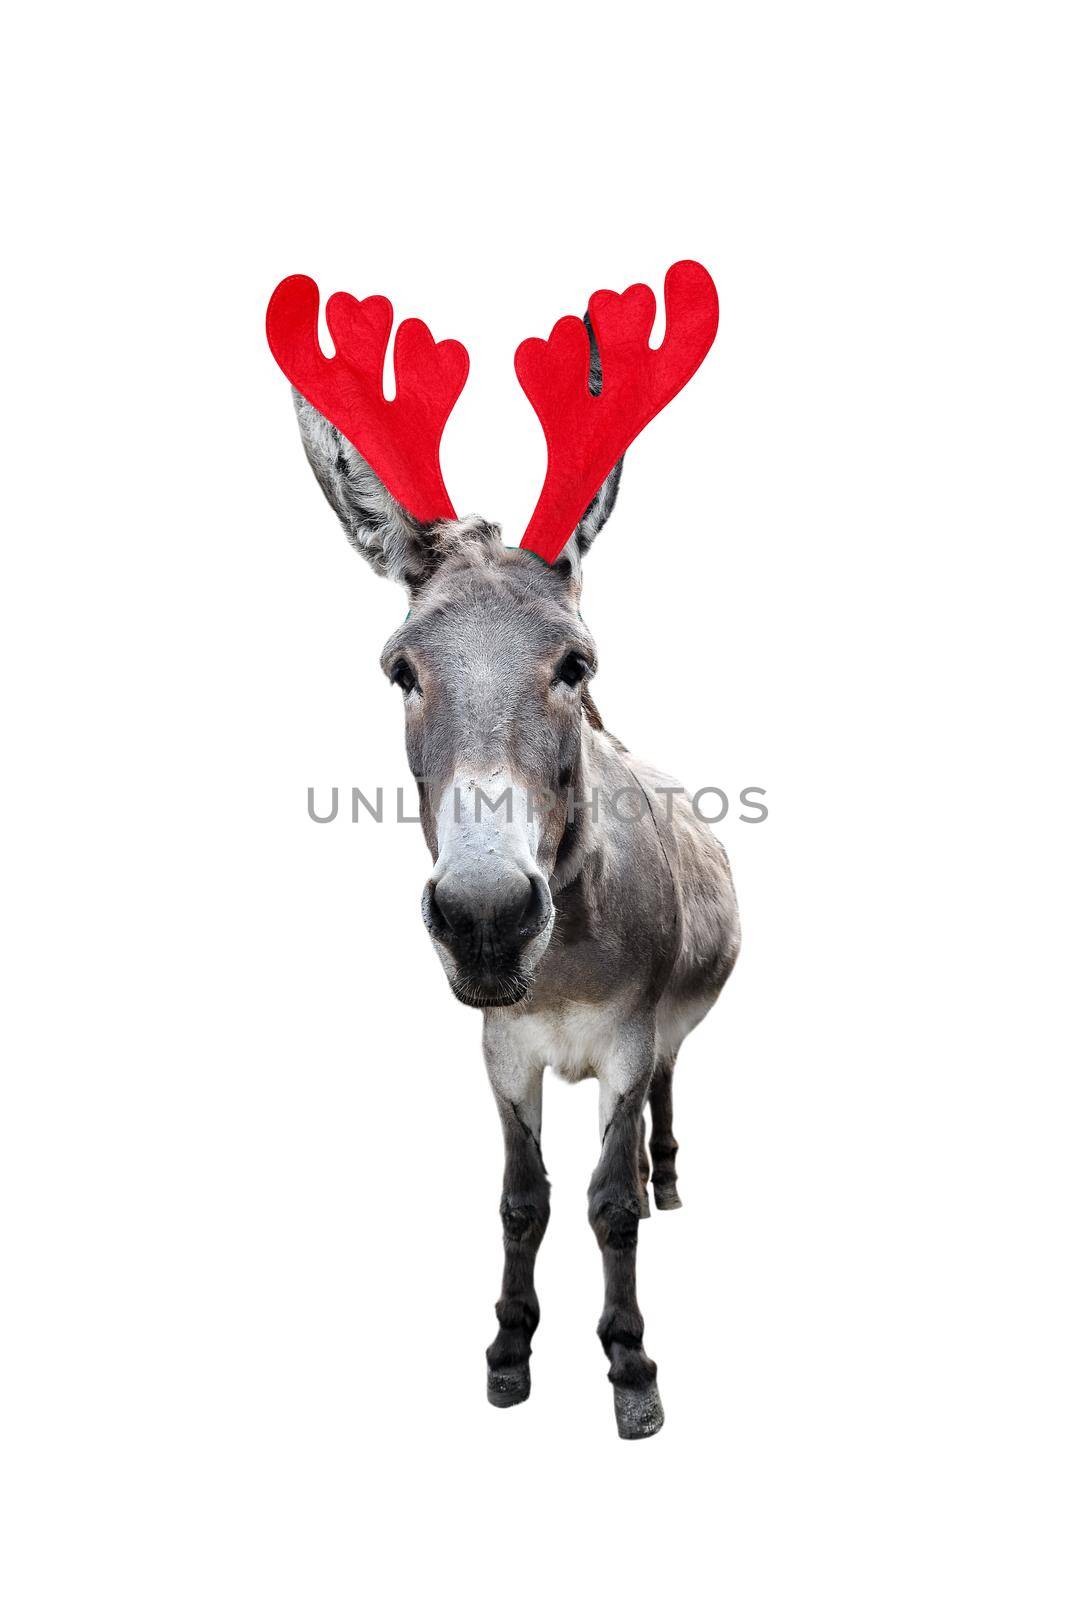 Christmas funny gray donkey isolated on white background. Full length donkey portrait in Christmas Reindeer Antlers Headband.